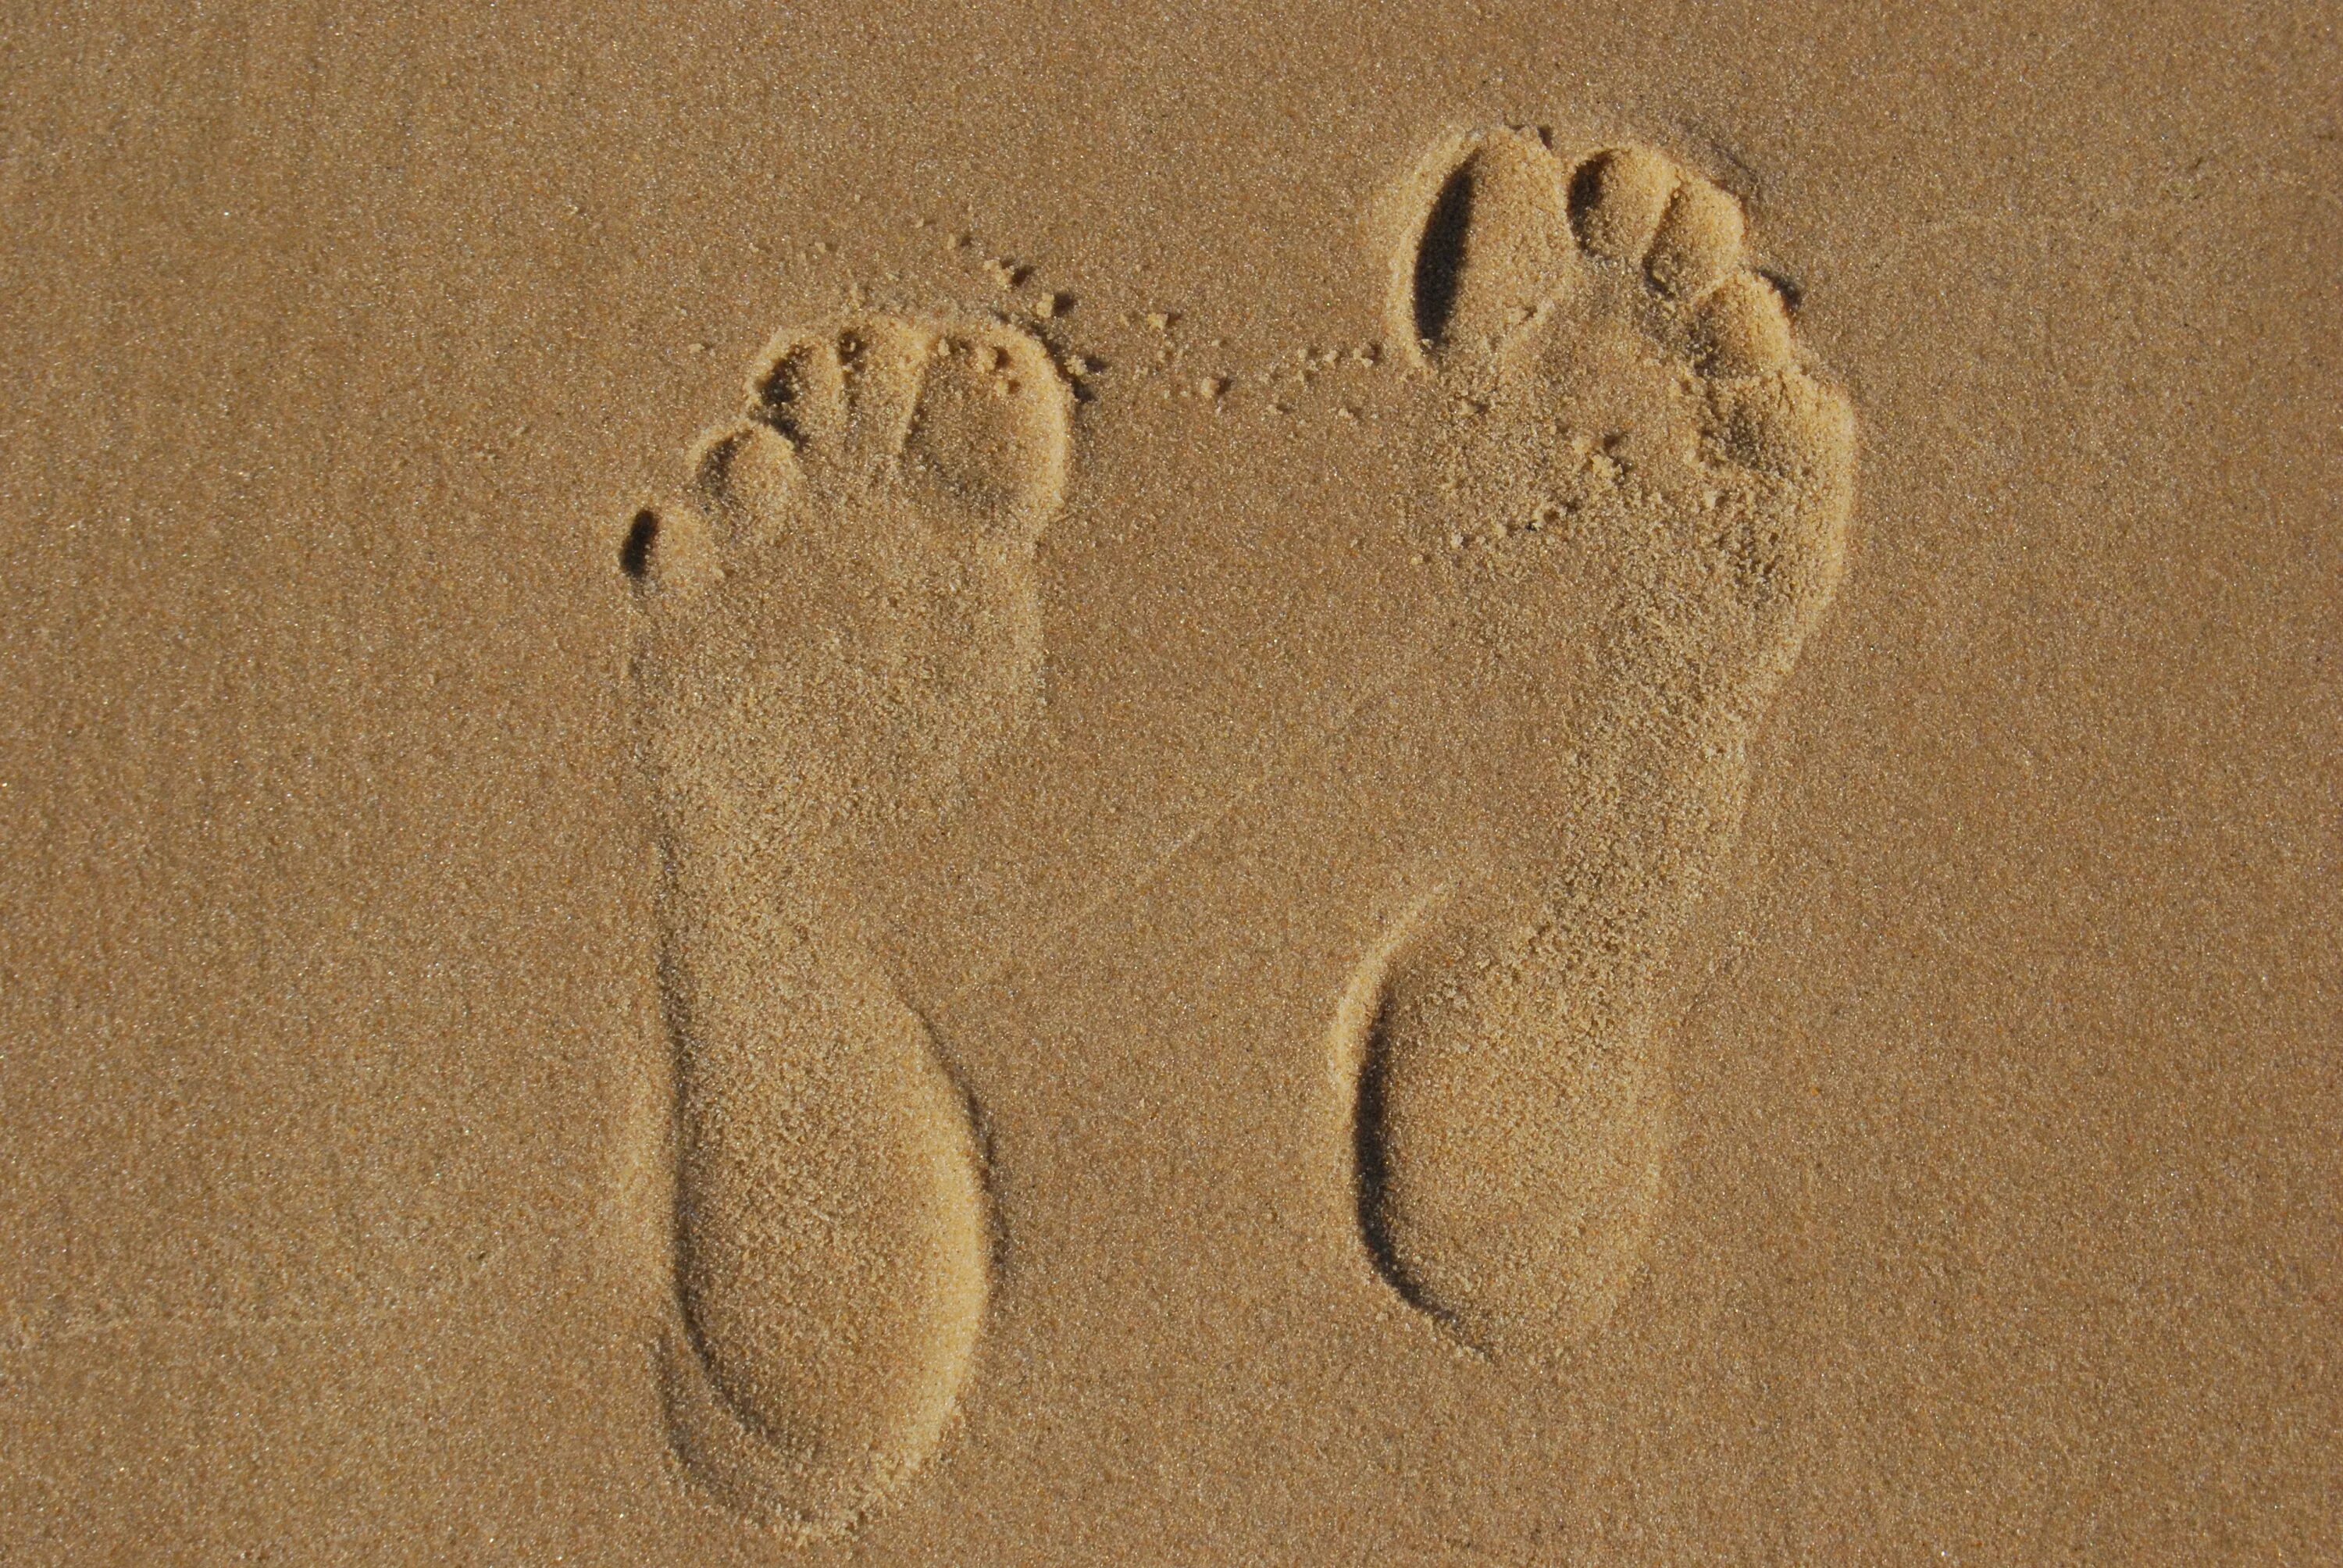 Следы любви. Следы на песке. Отпечаток ноги на песке. Следы человека на песке. Следы ног на песке.